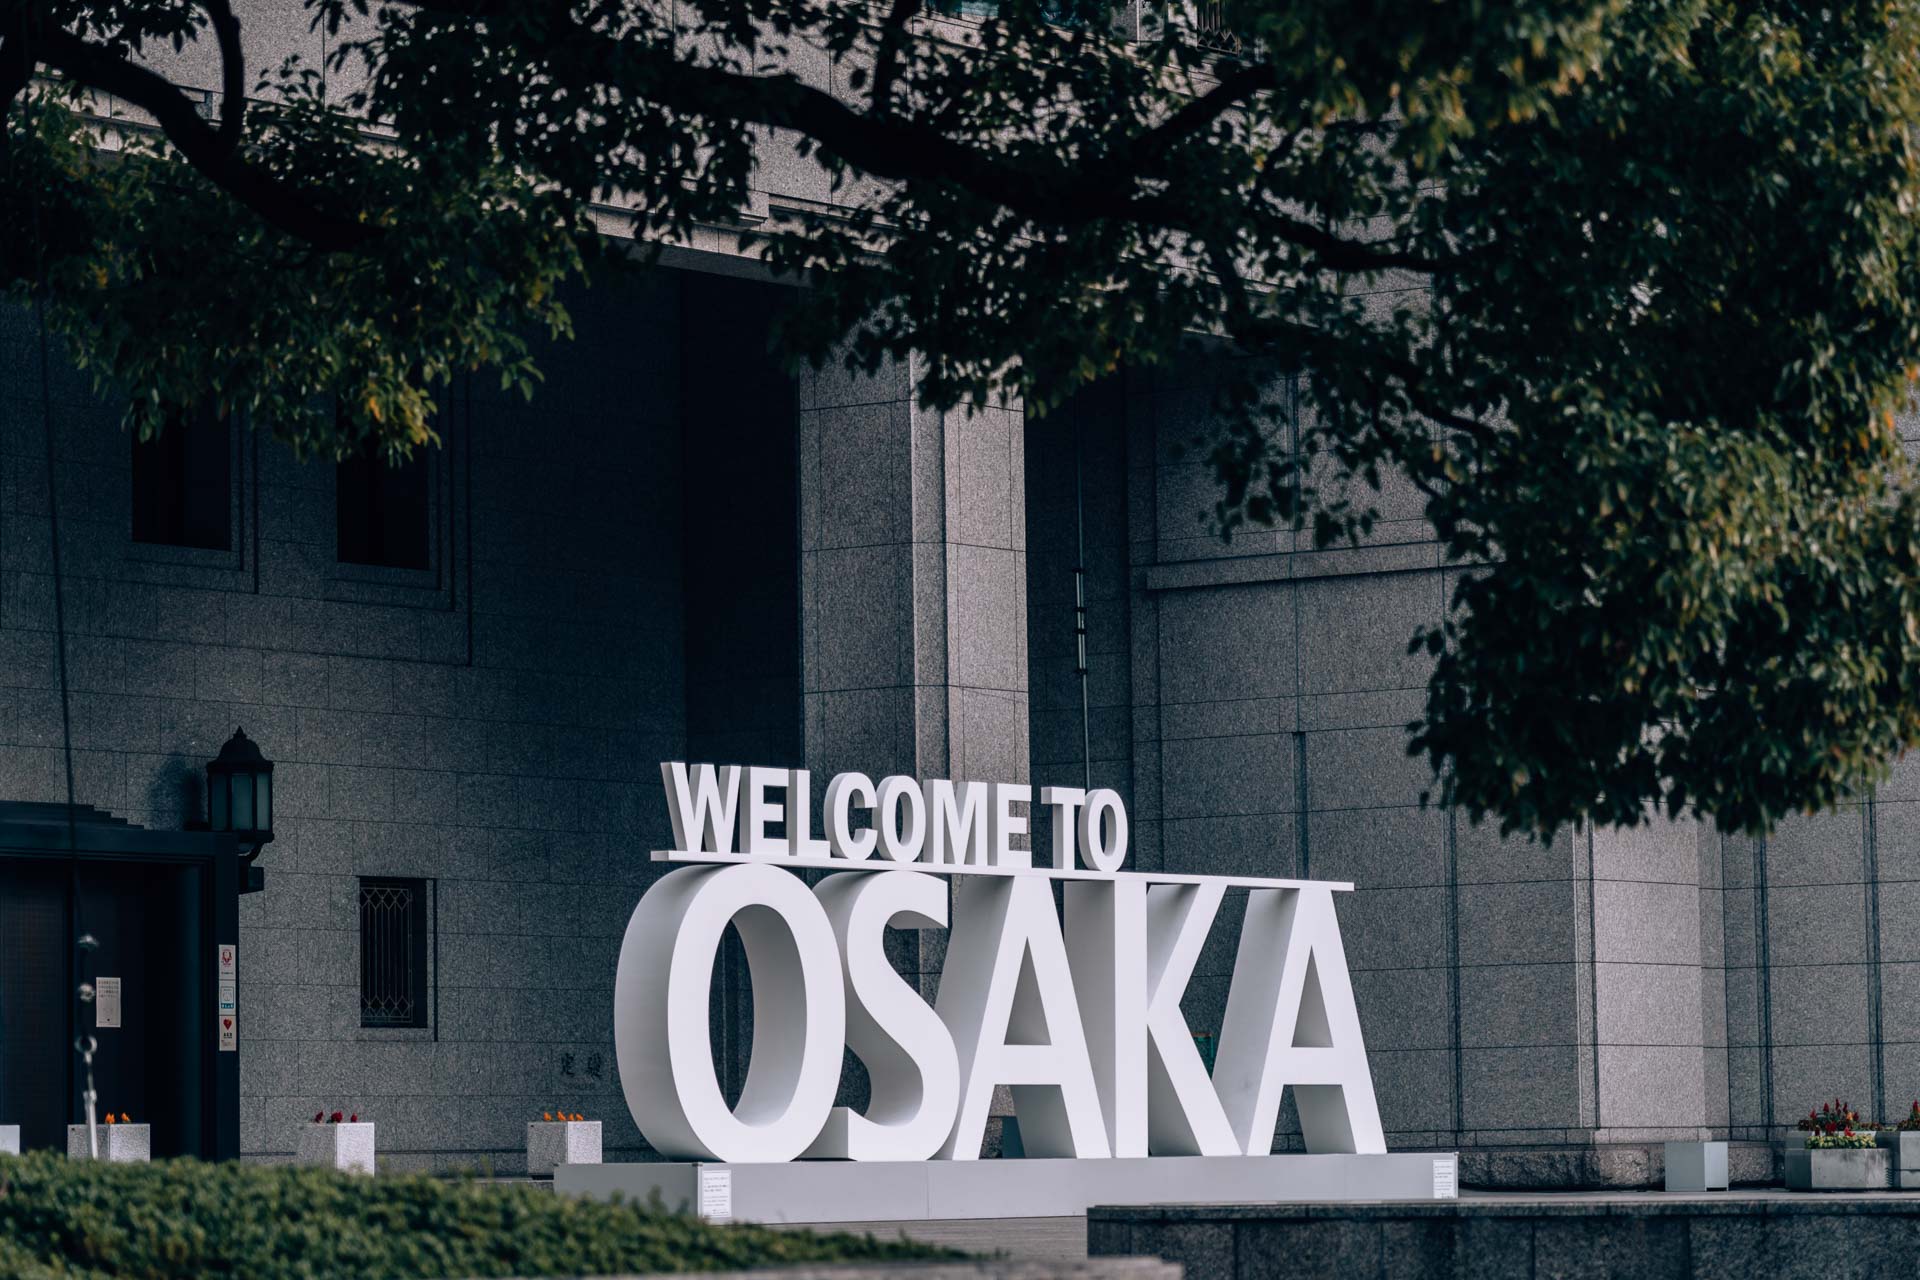 Welcome to Osaka